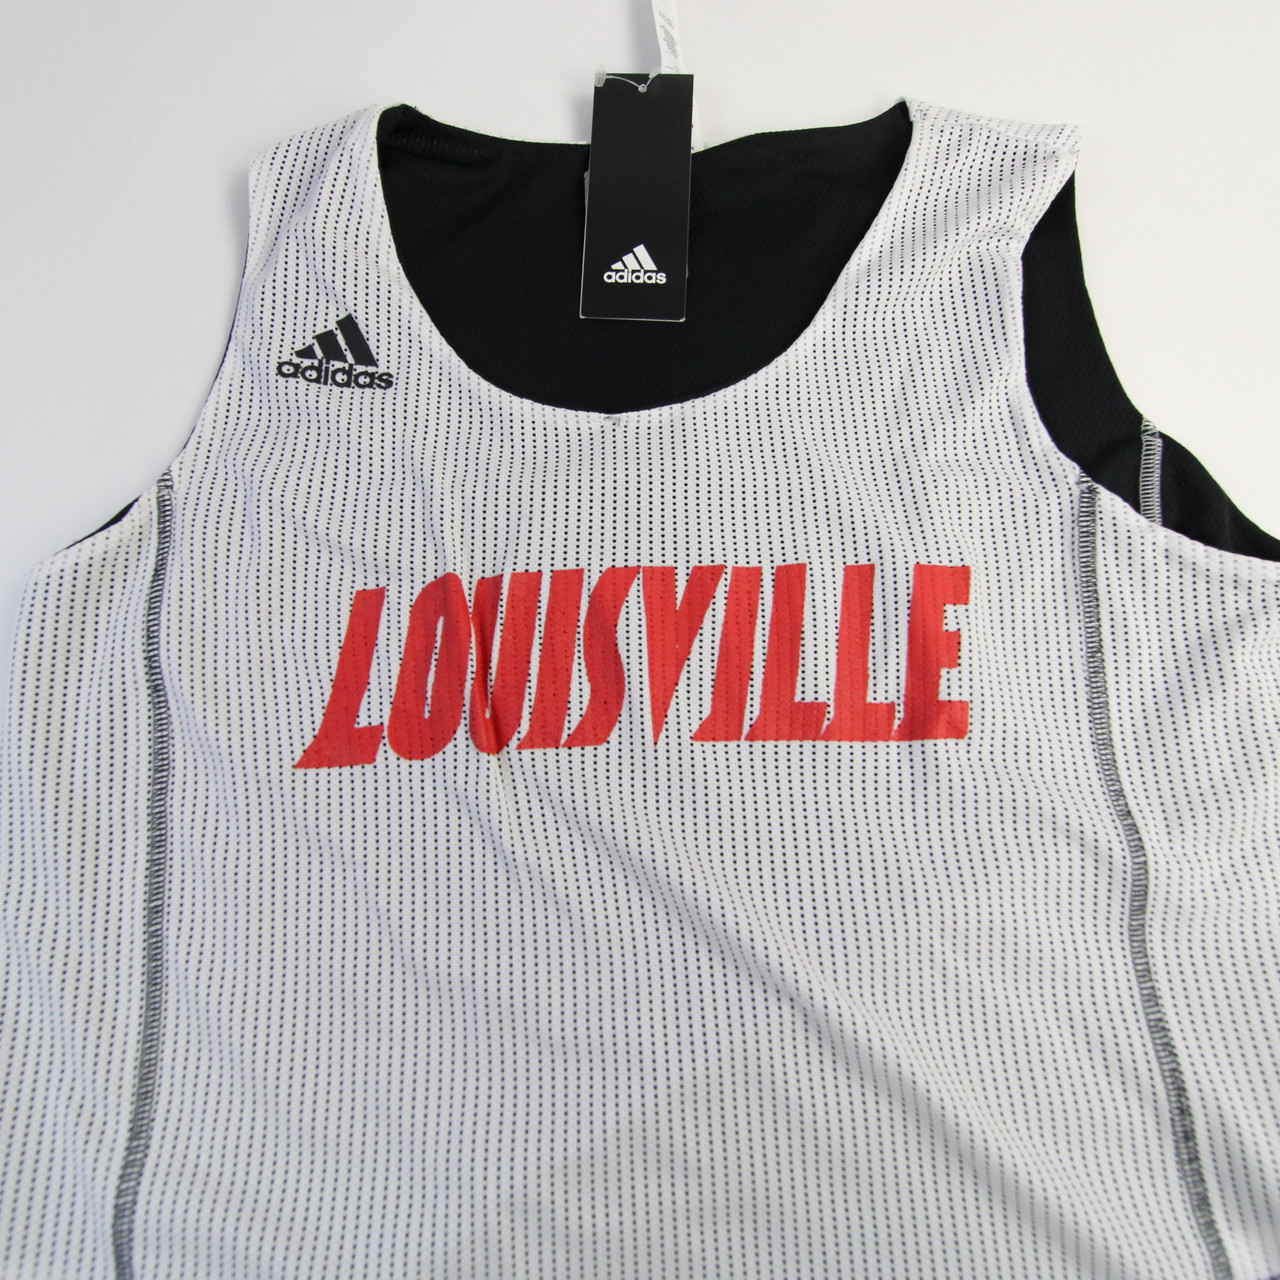 Louisville Cardinals black jersey